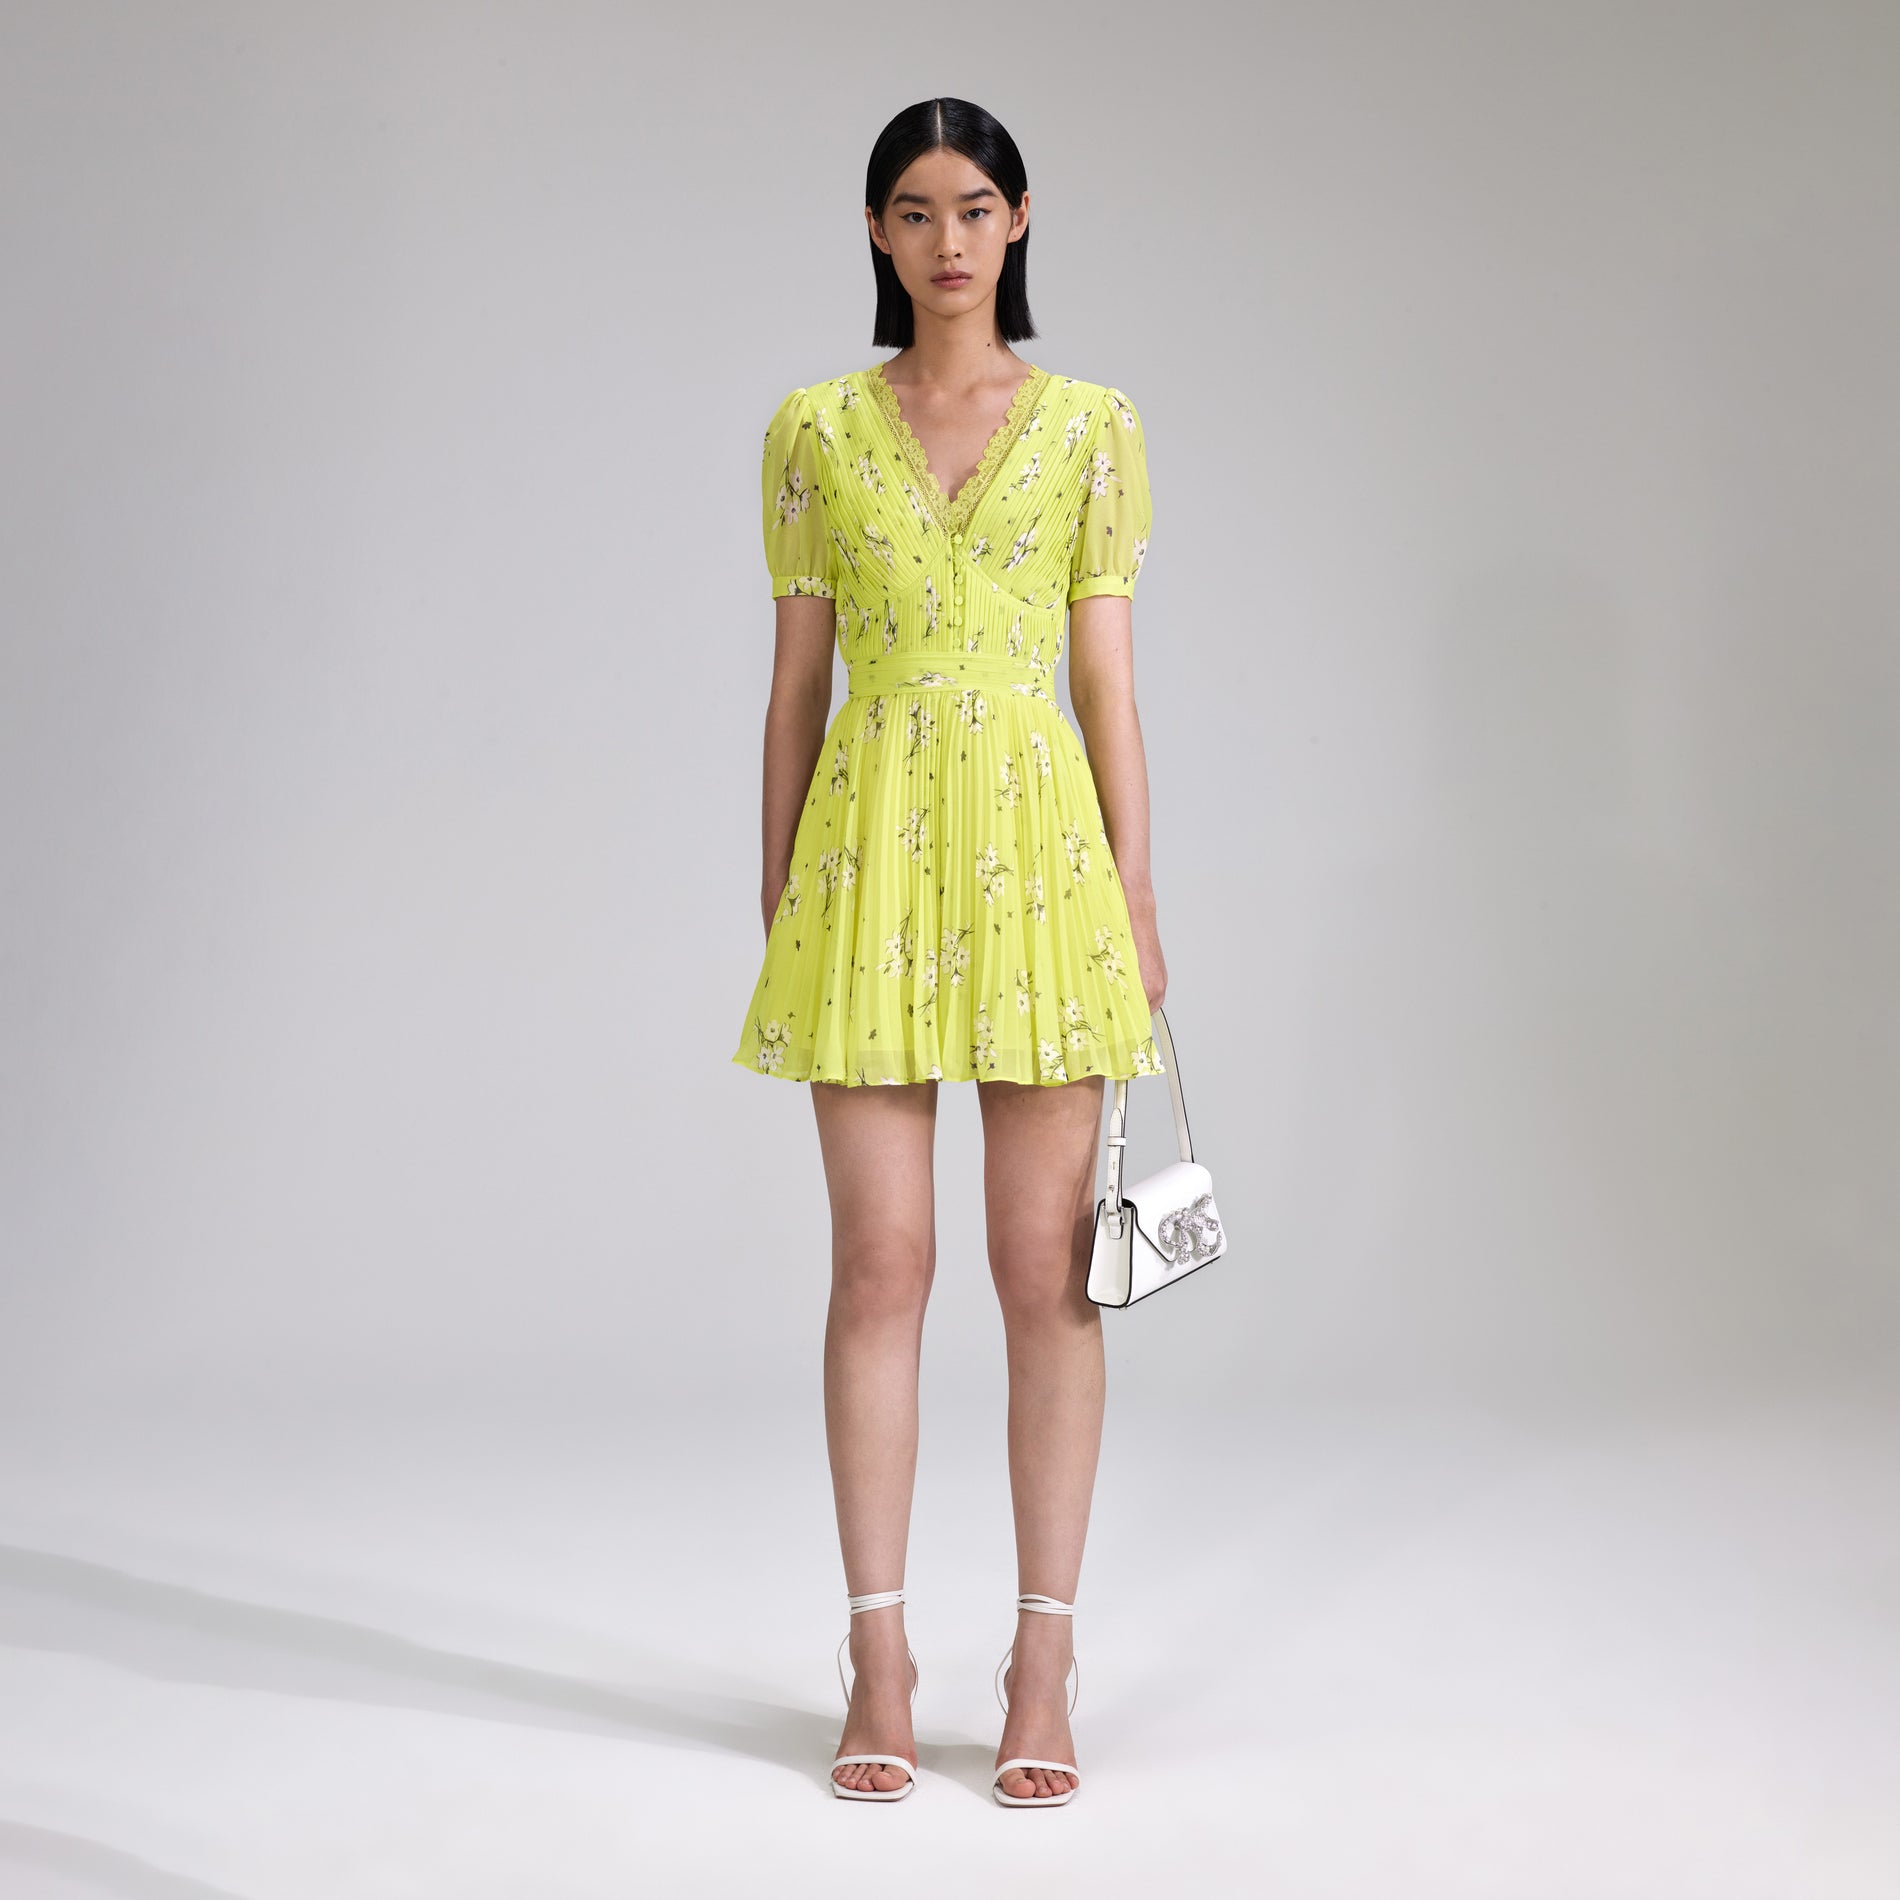 A woman wearing the Lime Floral Chiffon Mini Dress